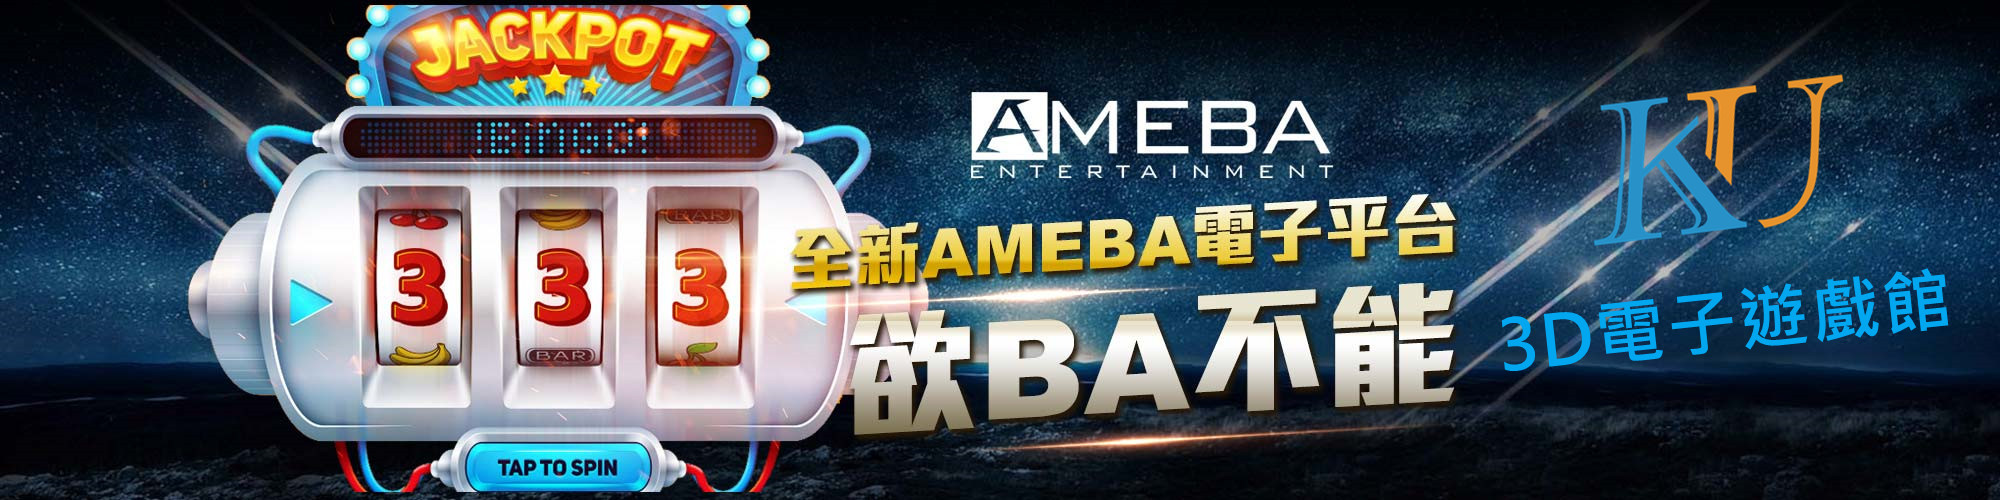 KU娛樂城|AMEBA電子遊戲館|註冊首存就送668好運金